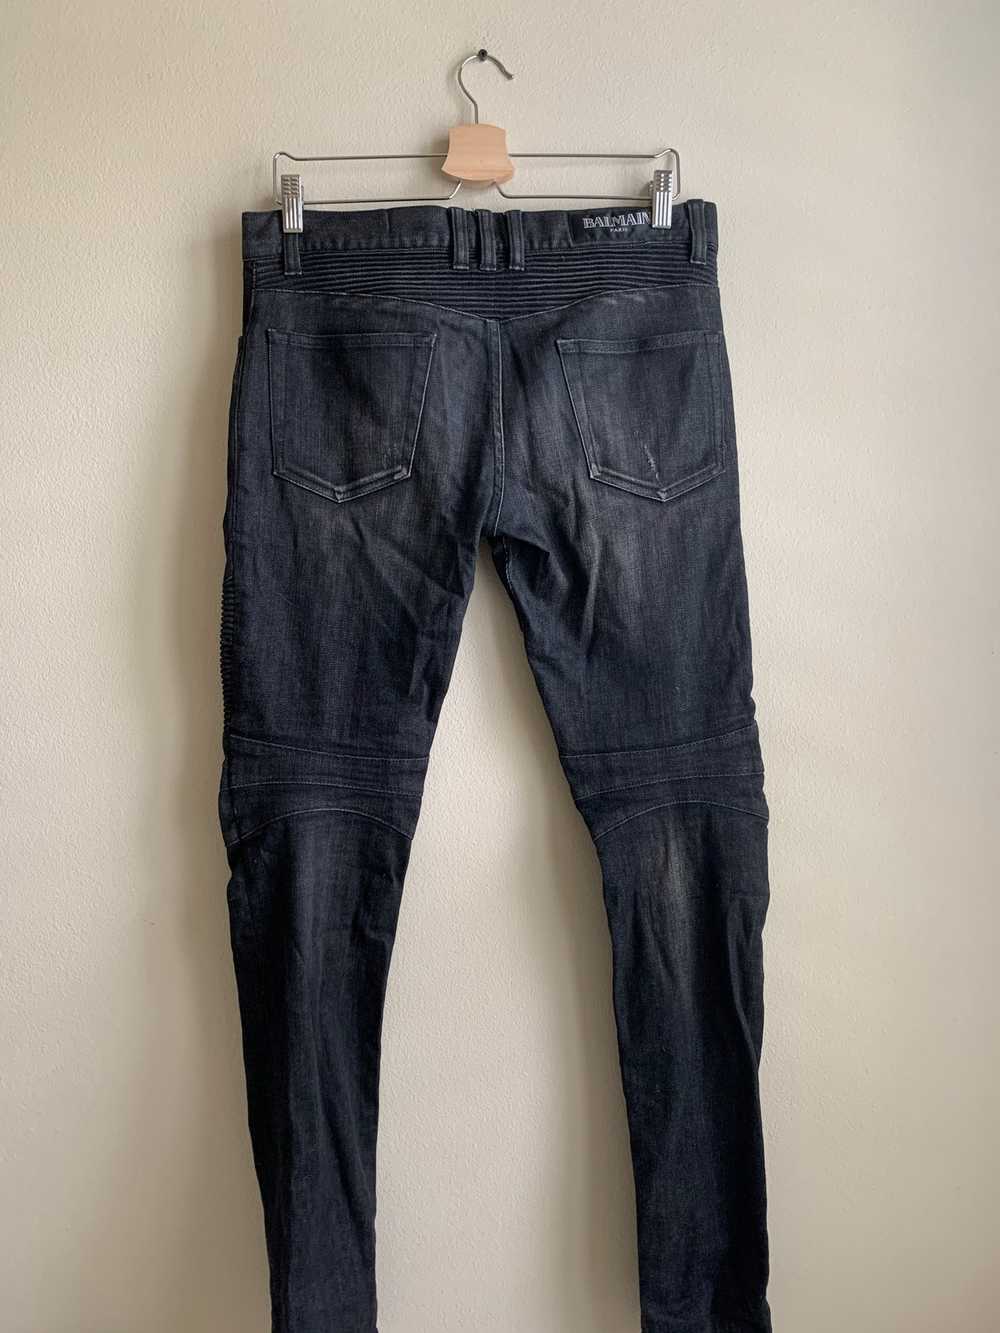 Balmain BALMAIN Ribbed Patches Slim Jeans - image 4